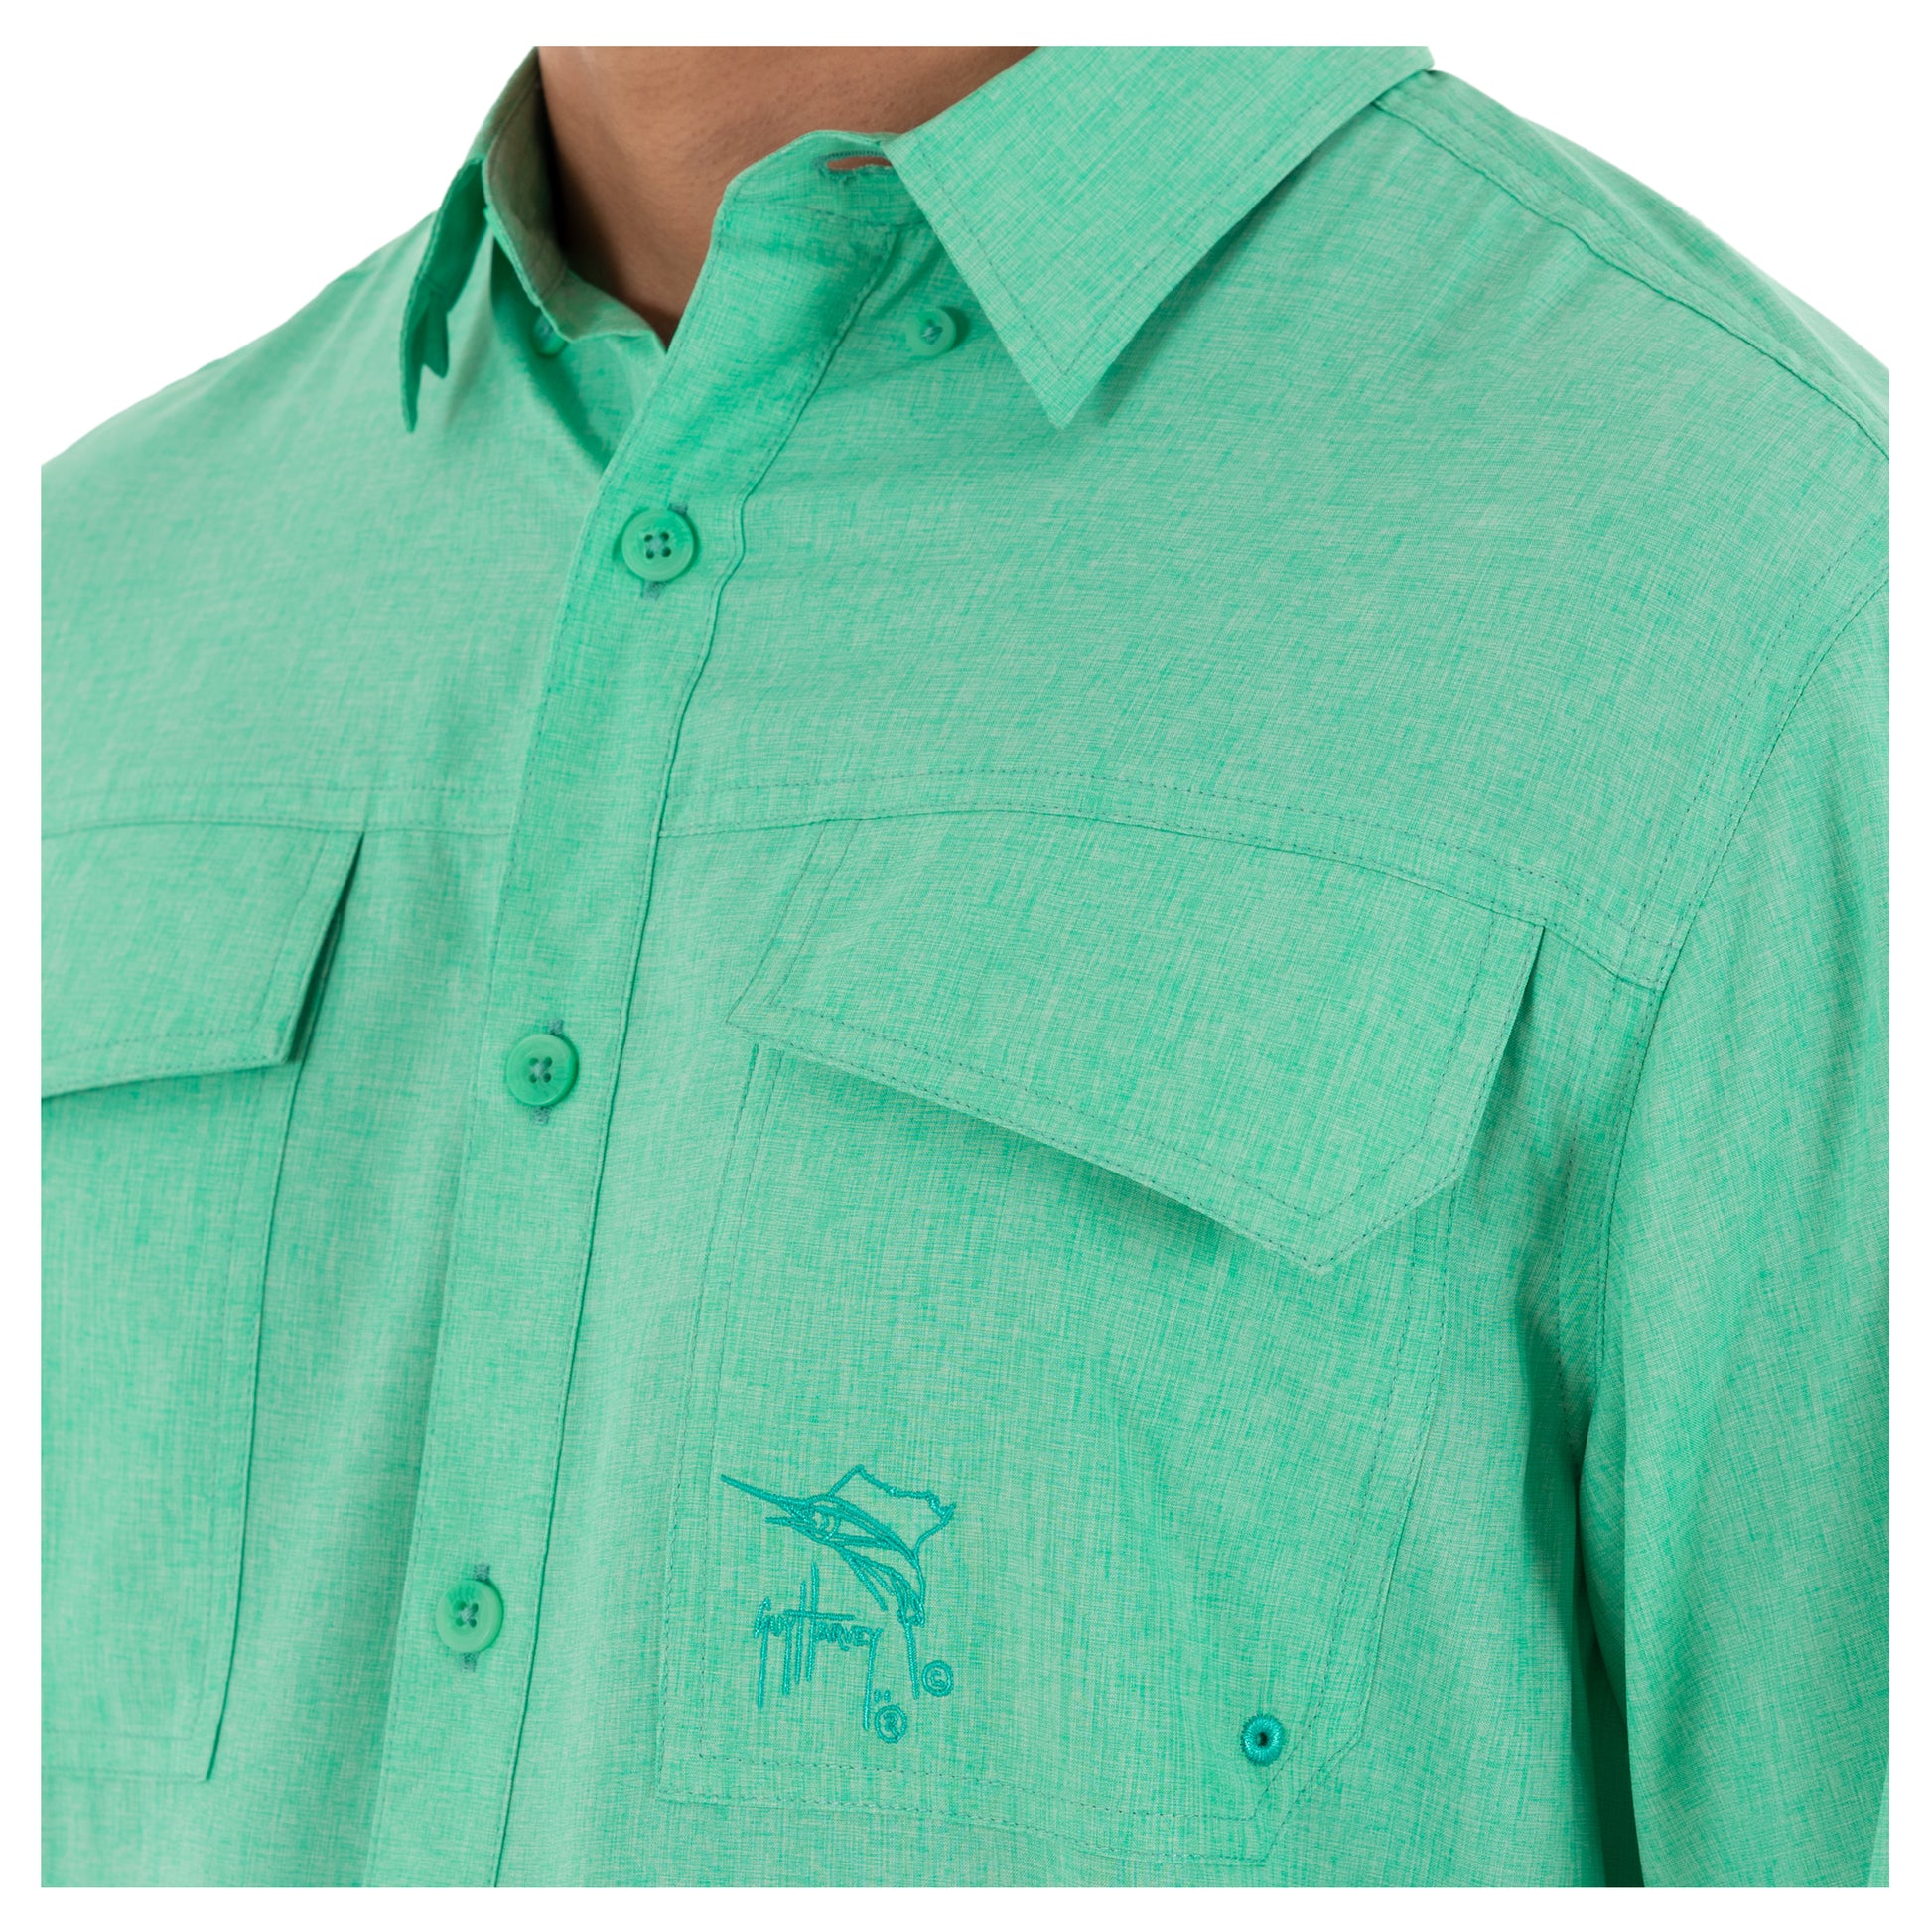 Men's Long Sleeve Heather Textured Cationic Green Fishing Shirt View 7